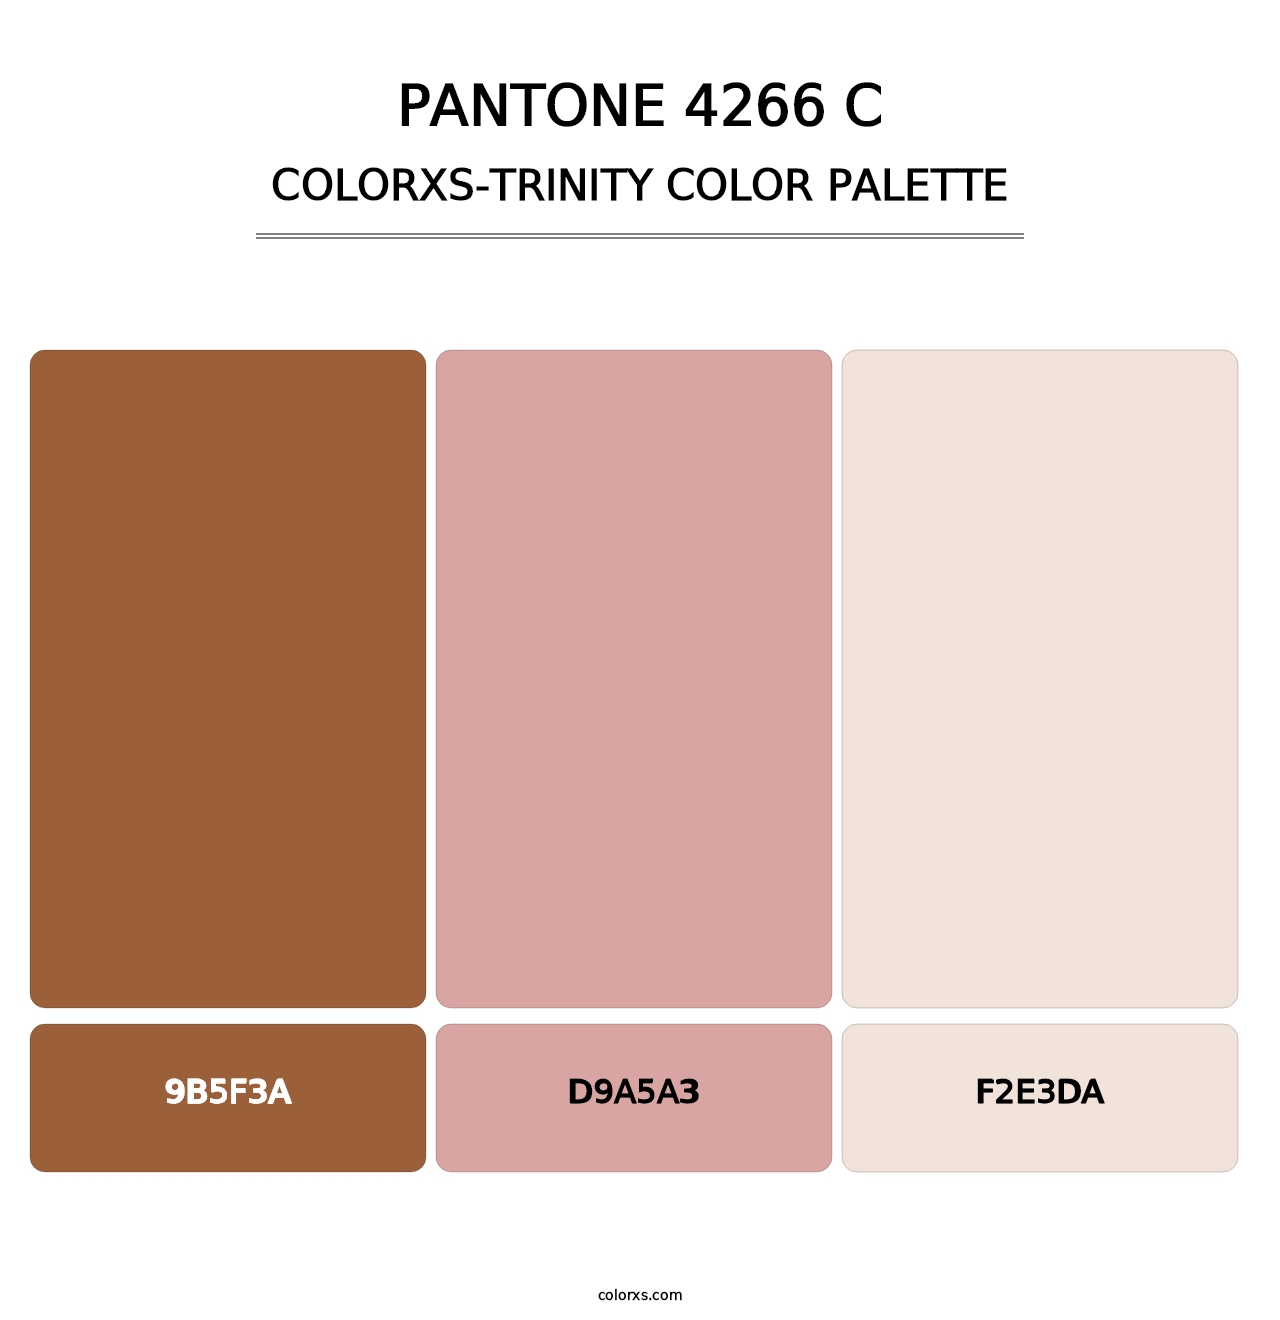 PANTONE 4266 C - Colorxs Trinity Palette